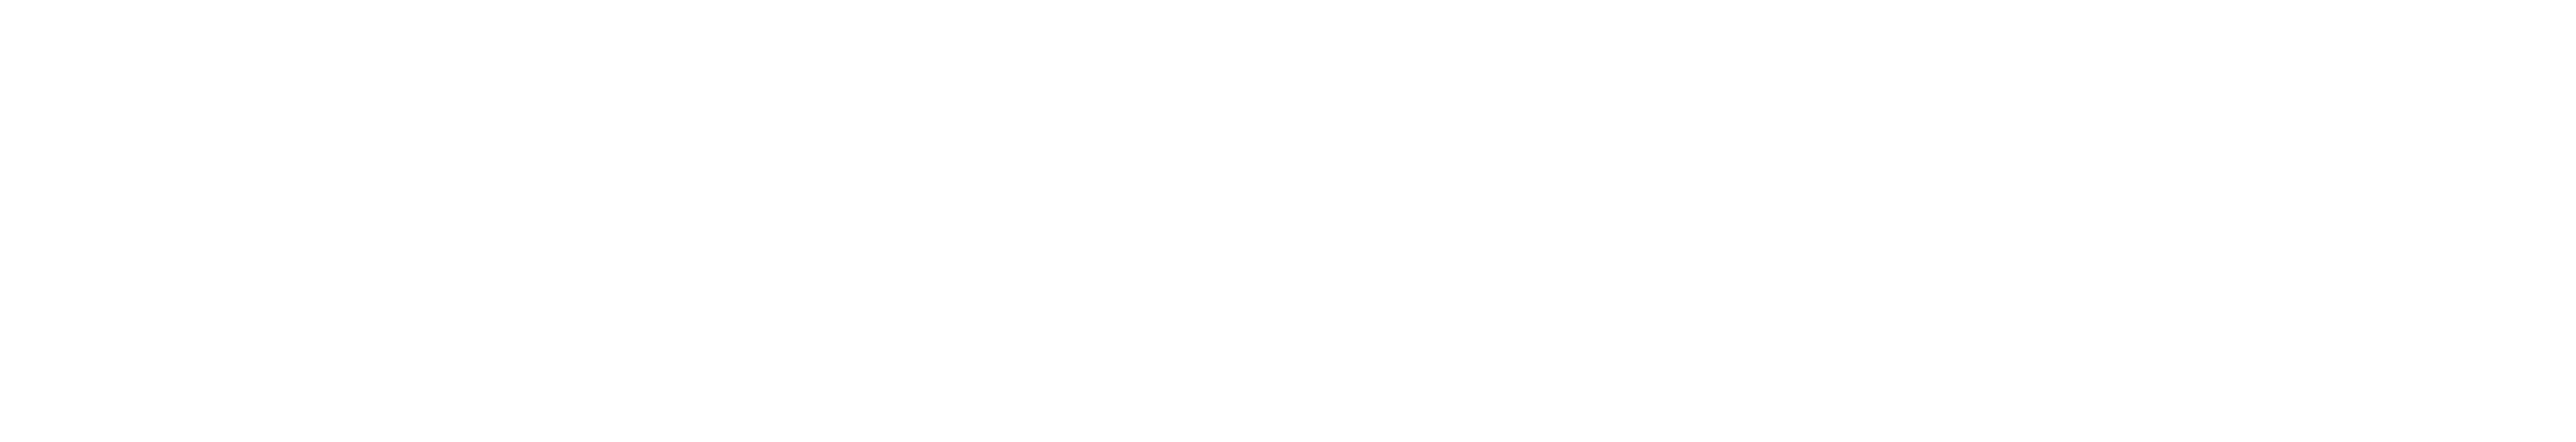 Warragul Community HouseSocial Groups